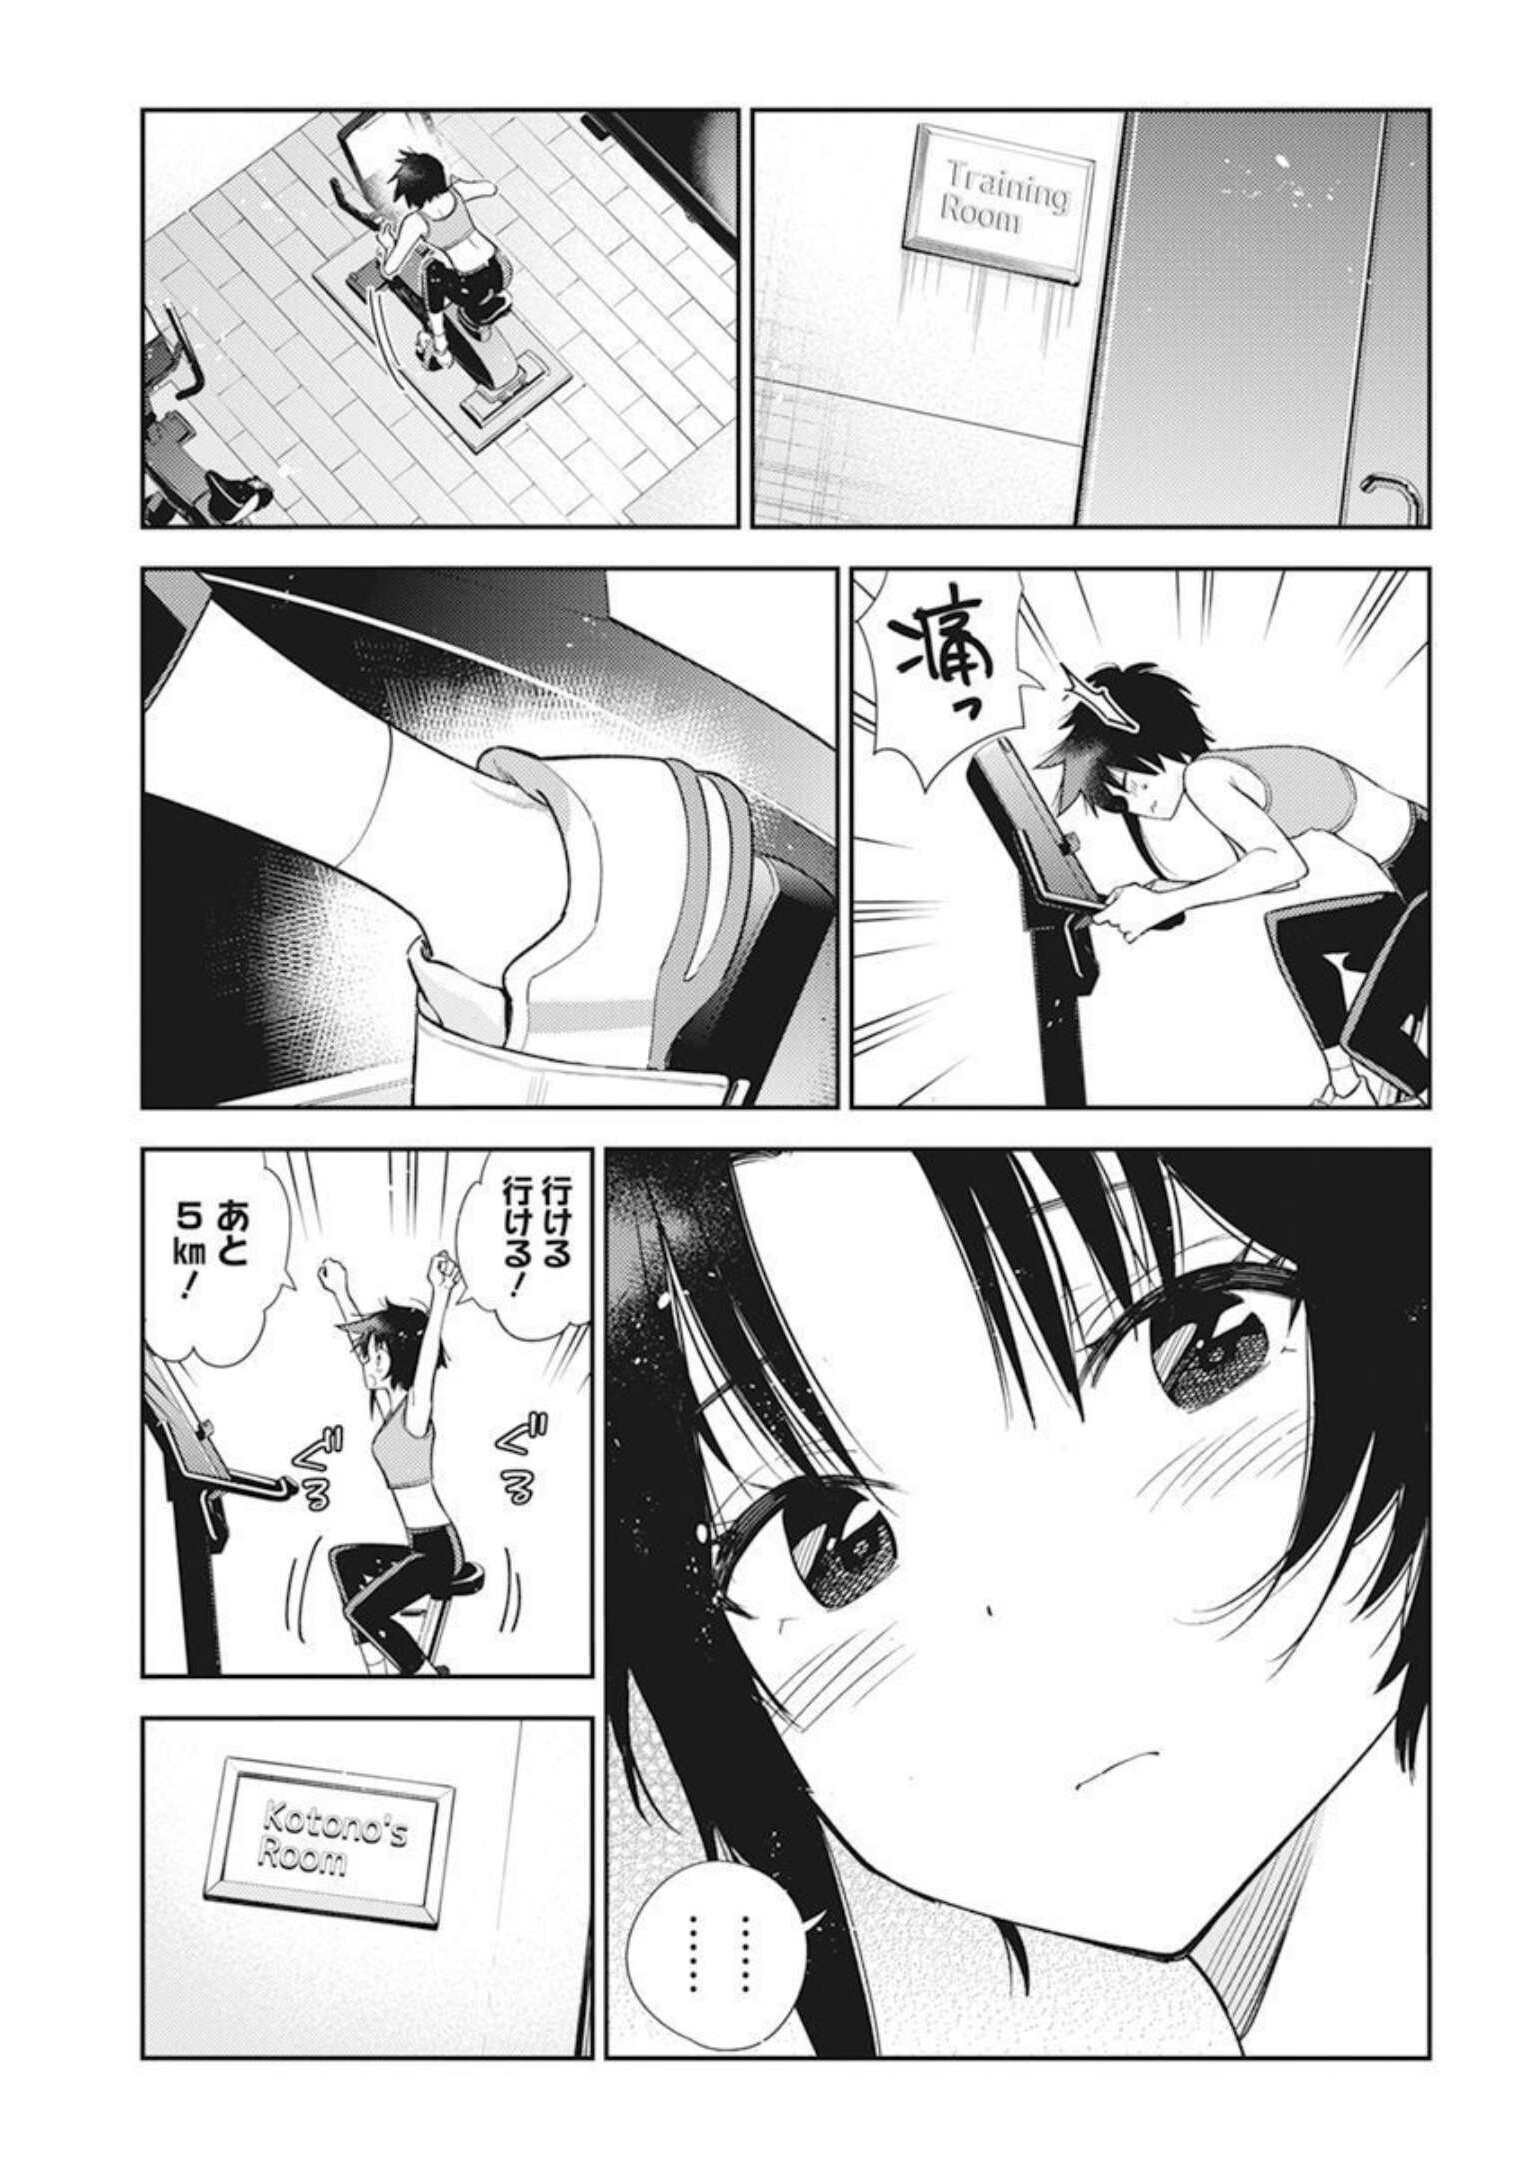 Shiunji-ke no Kodomotachi (Children of the Shiunji Family) - Chapter 01 - Page 36